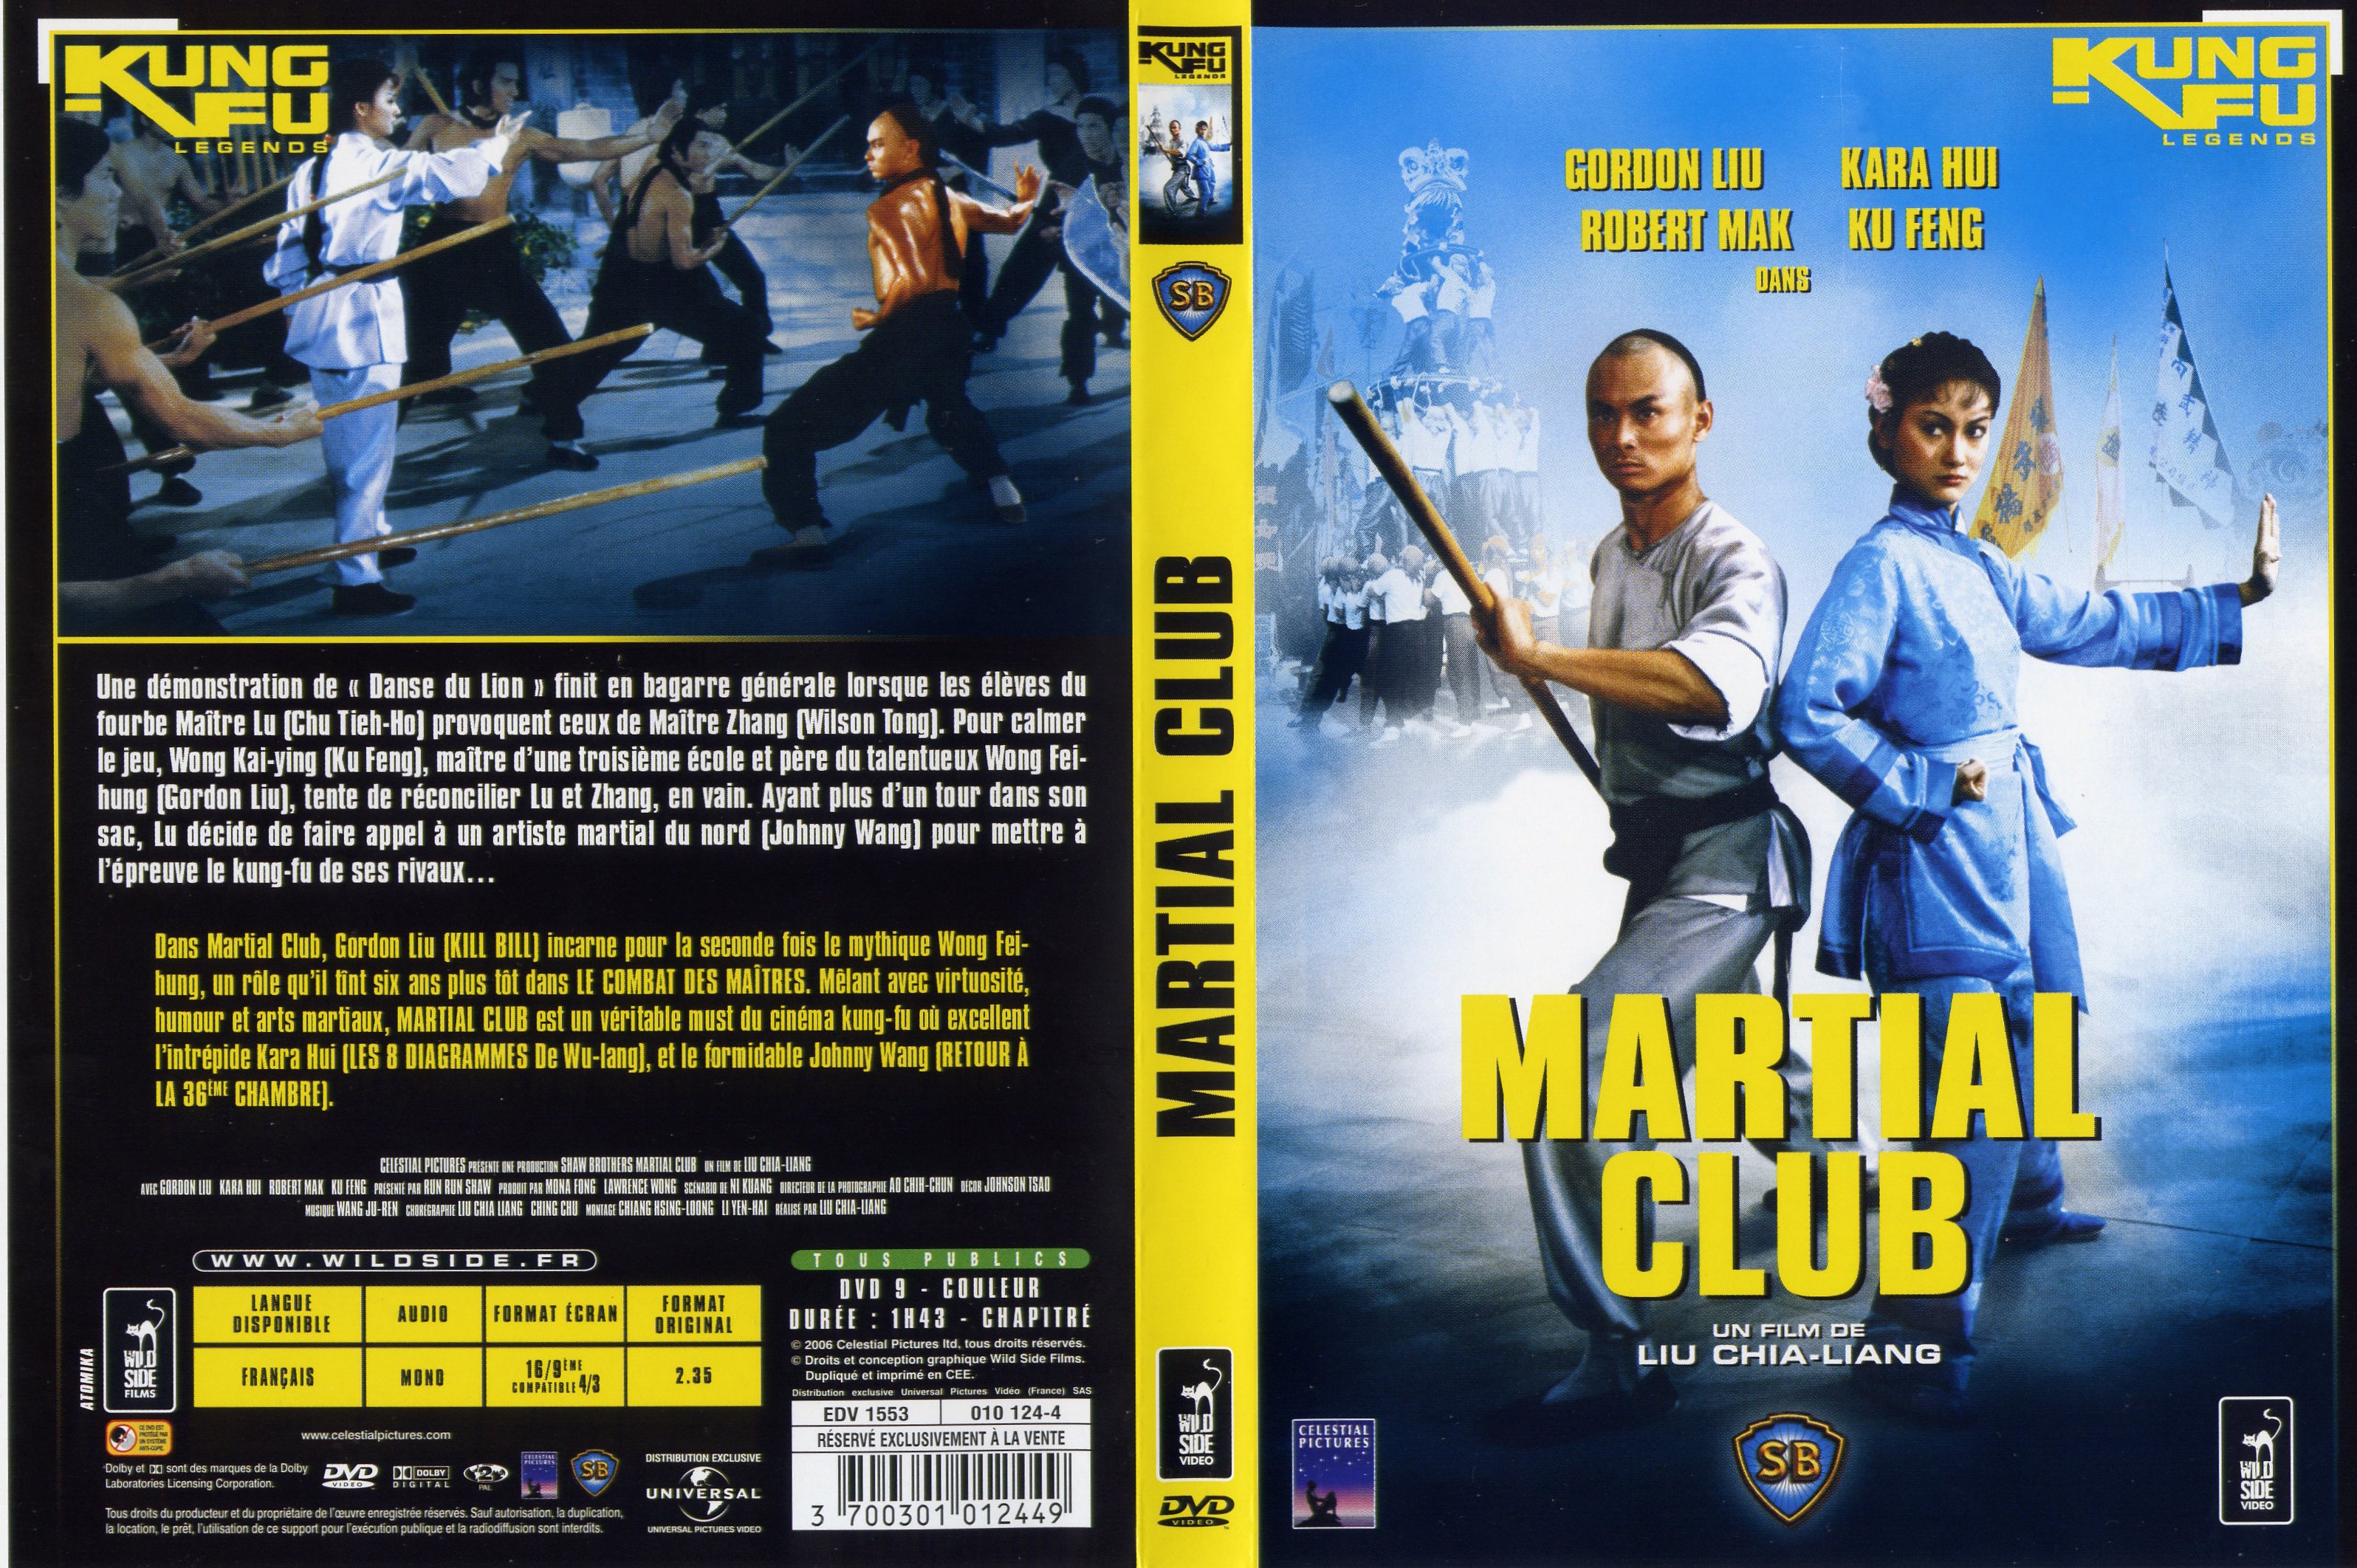 Jaquette DVD Martial club